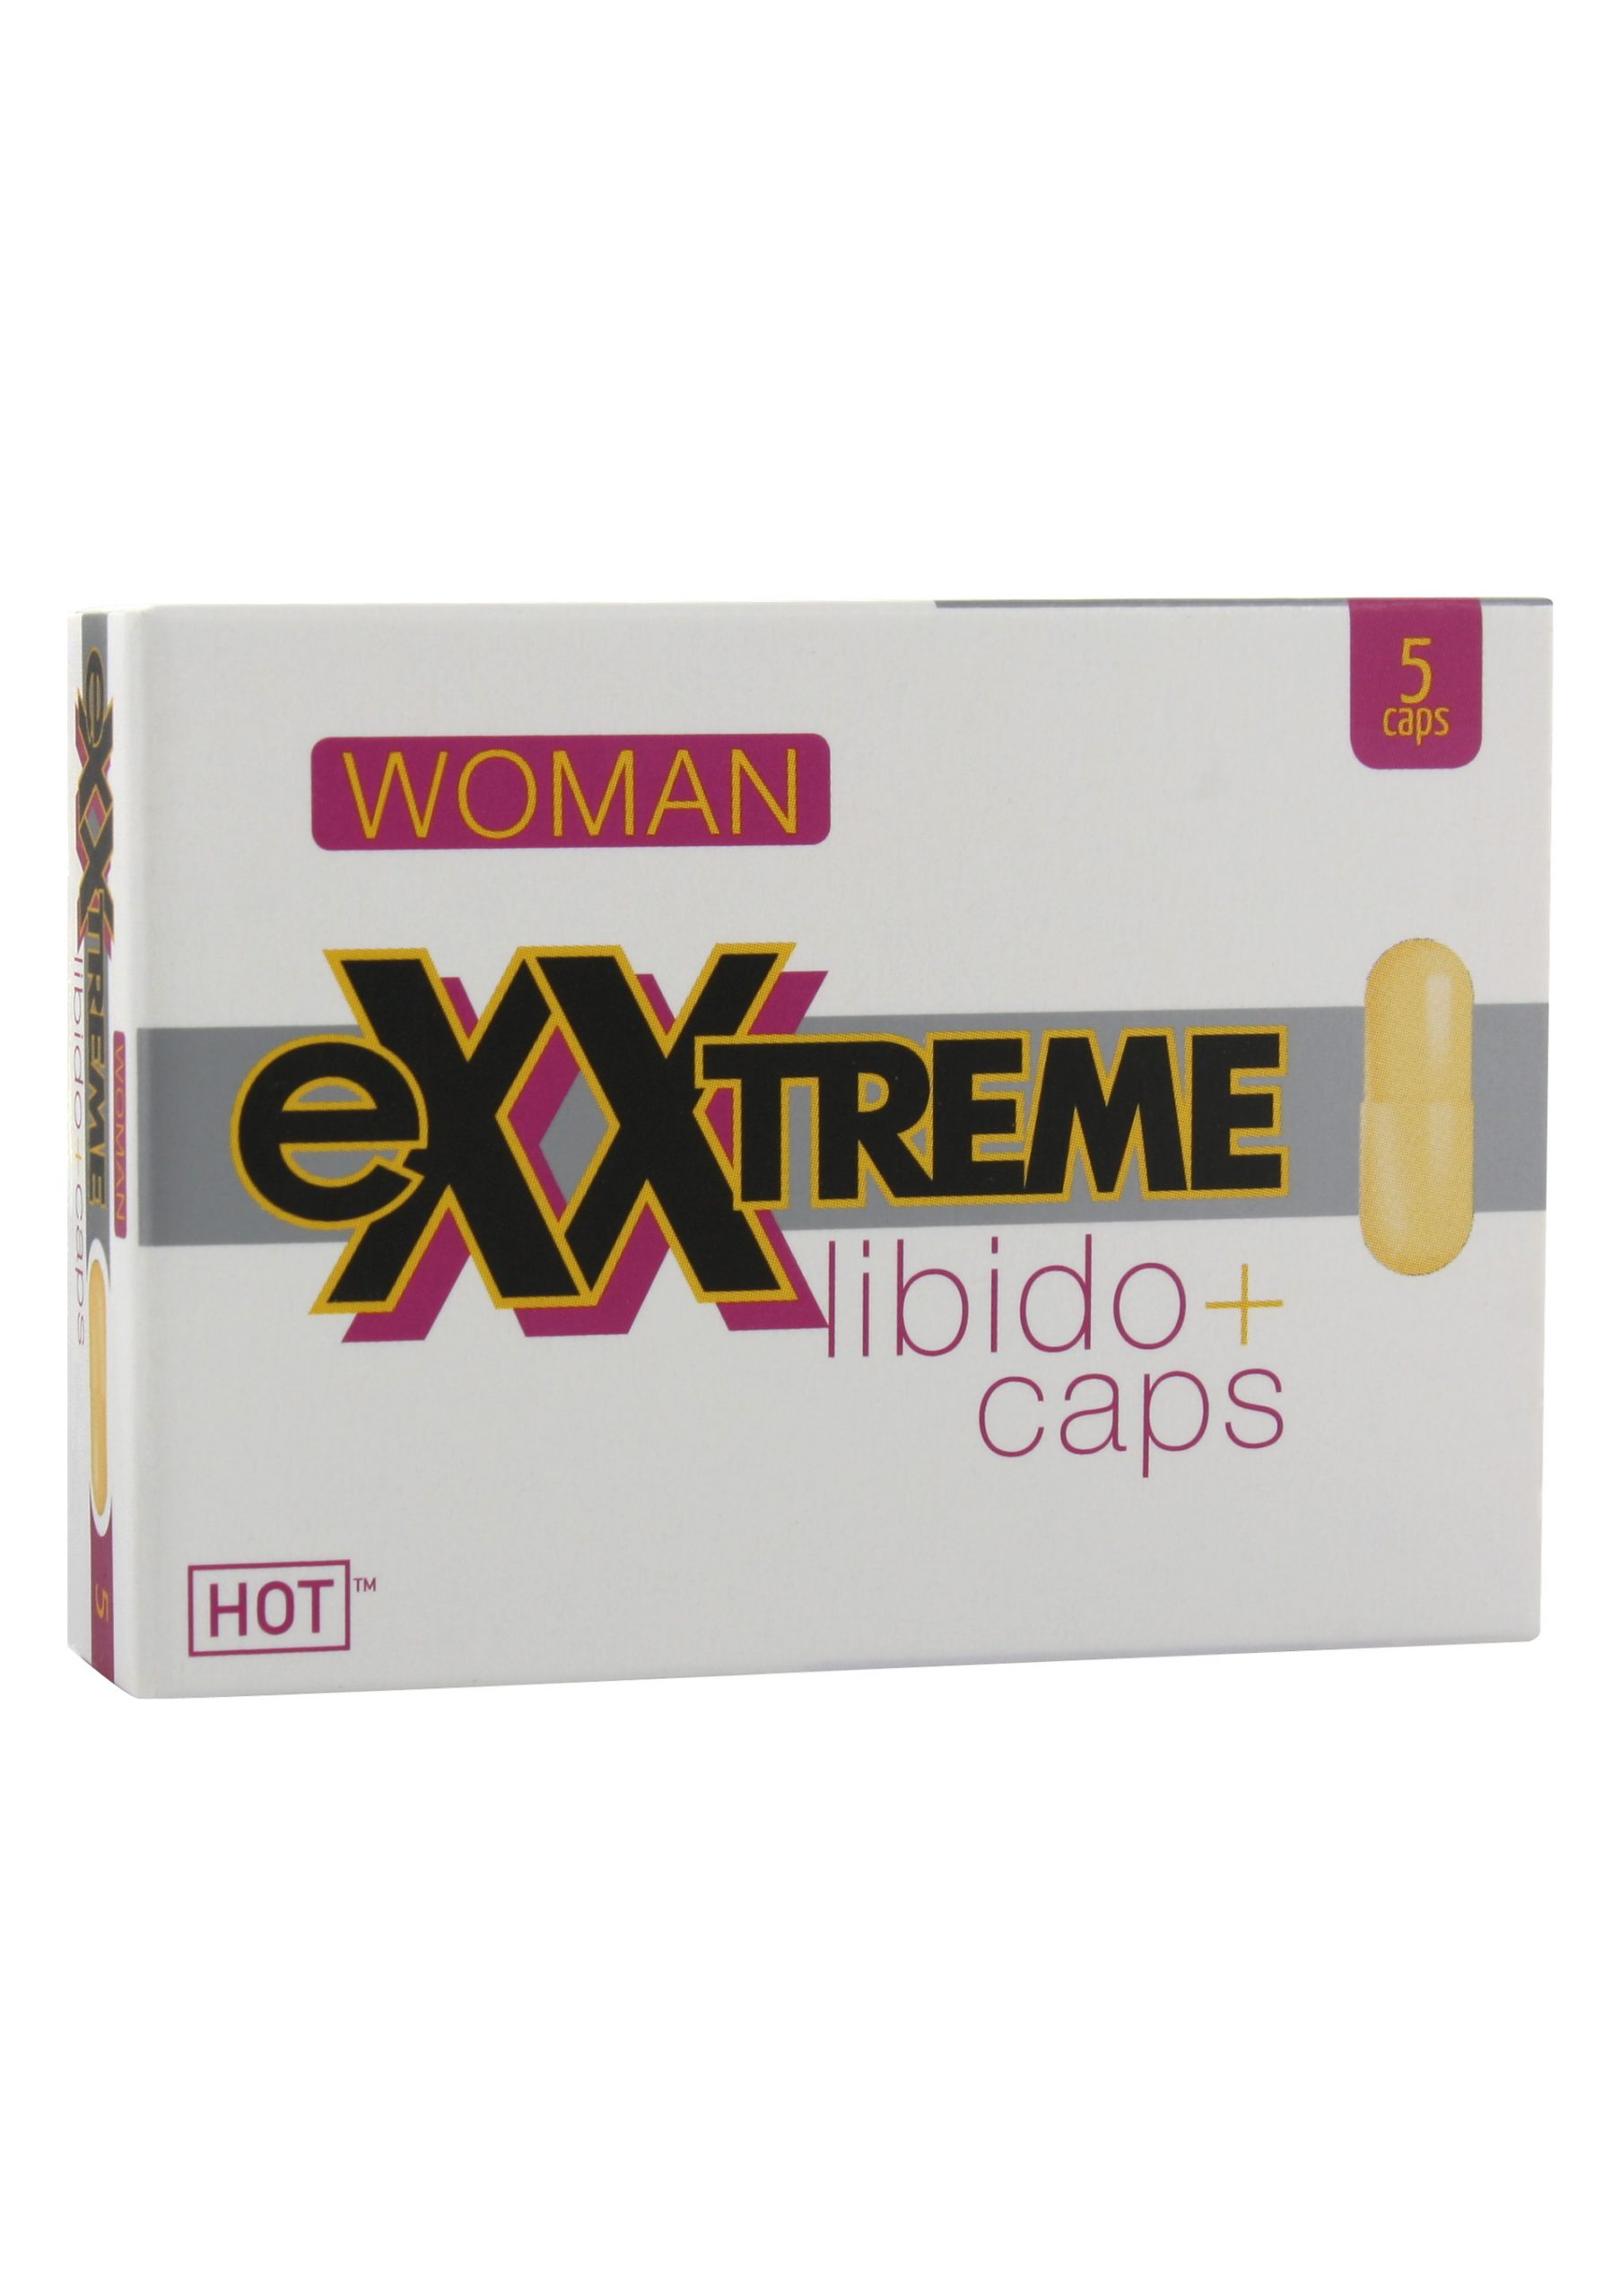 Image of Exxtreme Libido+ Woman 5 stuks 